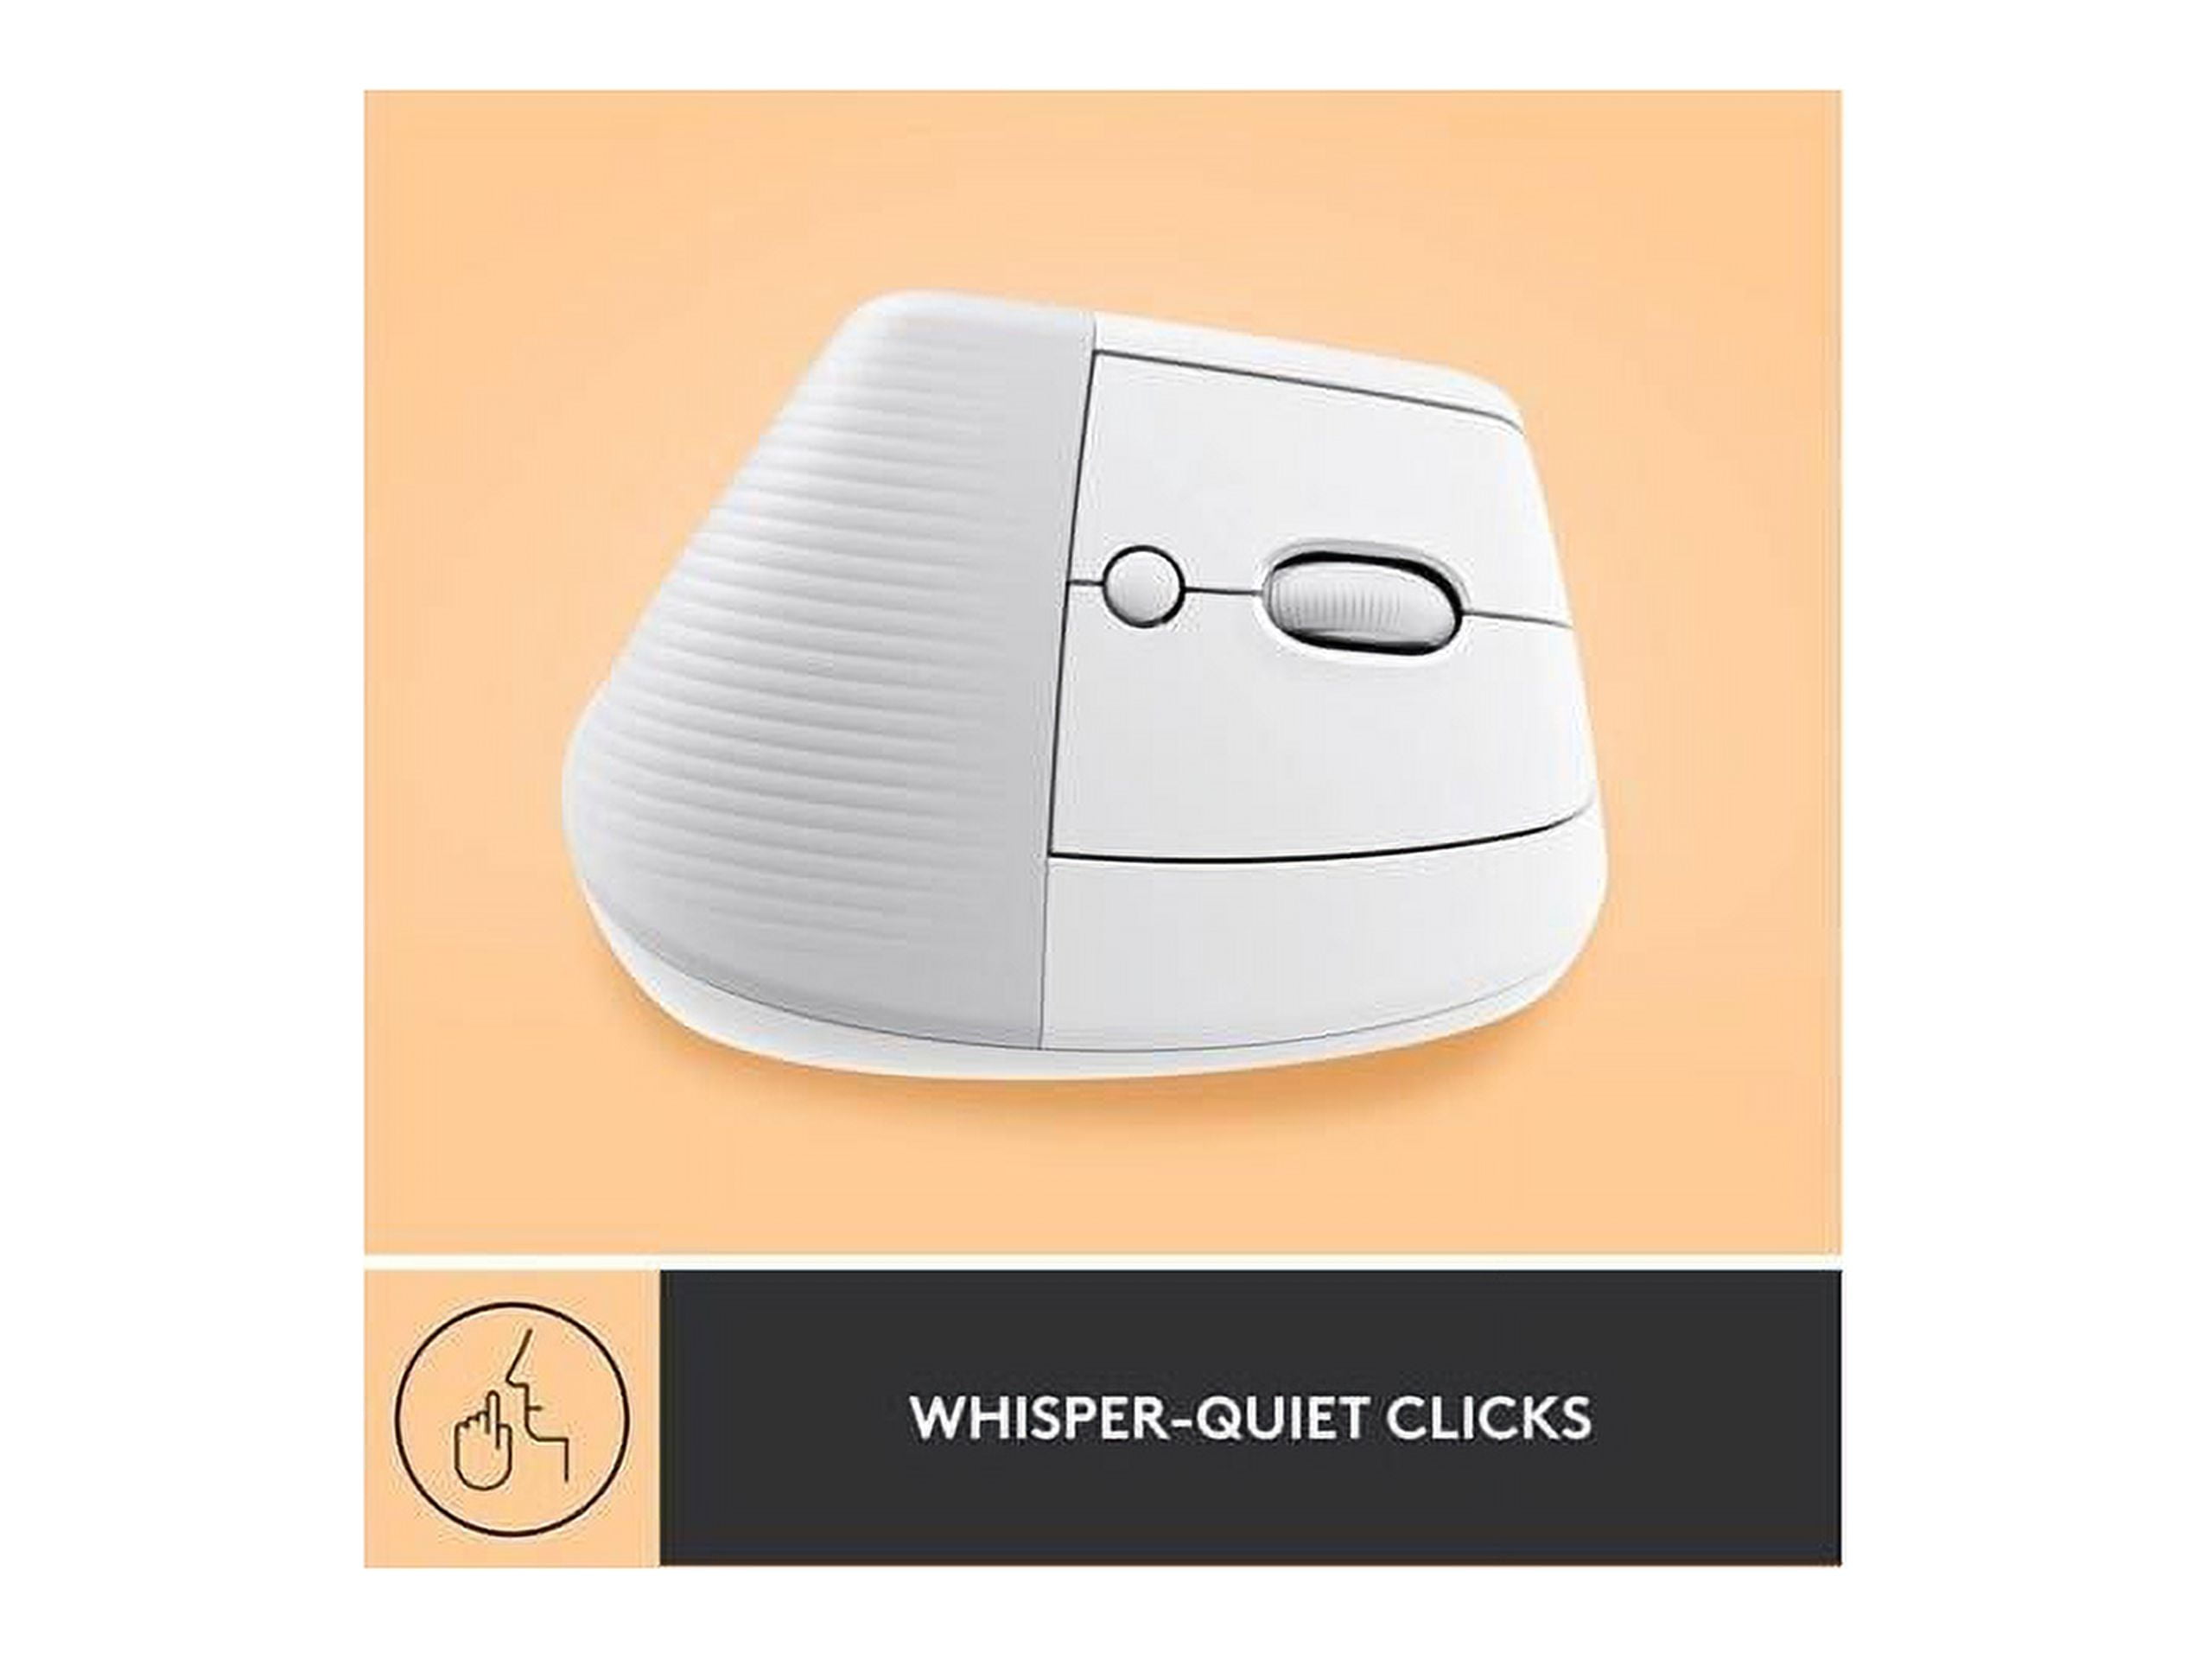 Logitech LIFT VERTICAL Ergonomic Wireless Mouse - Victory Store